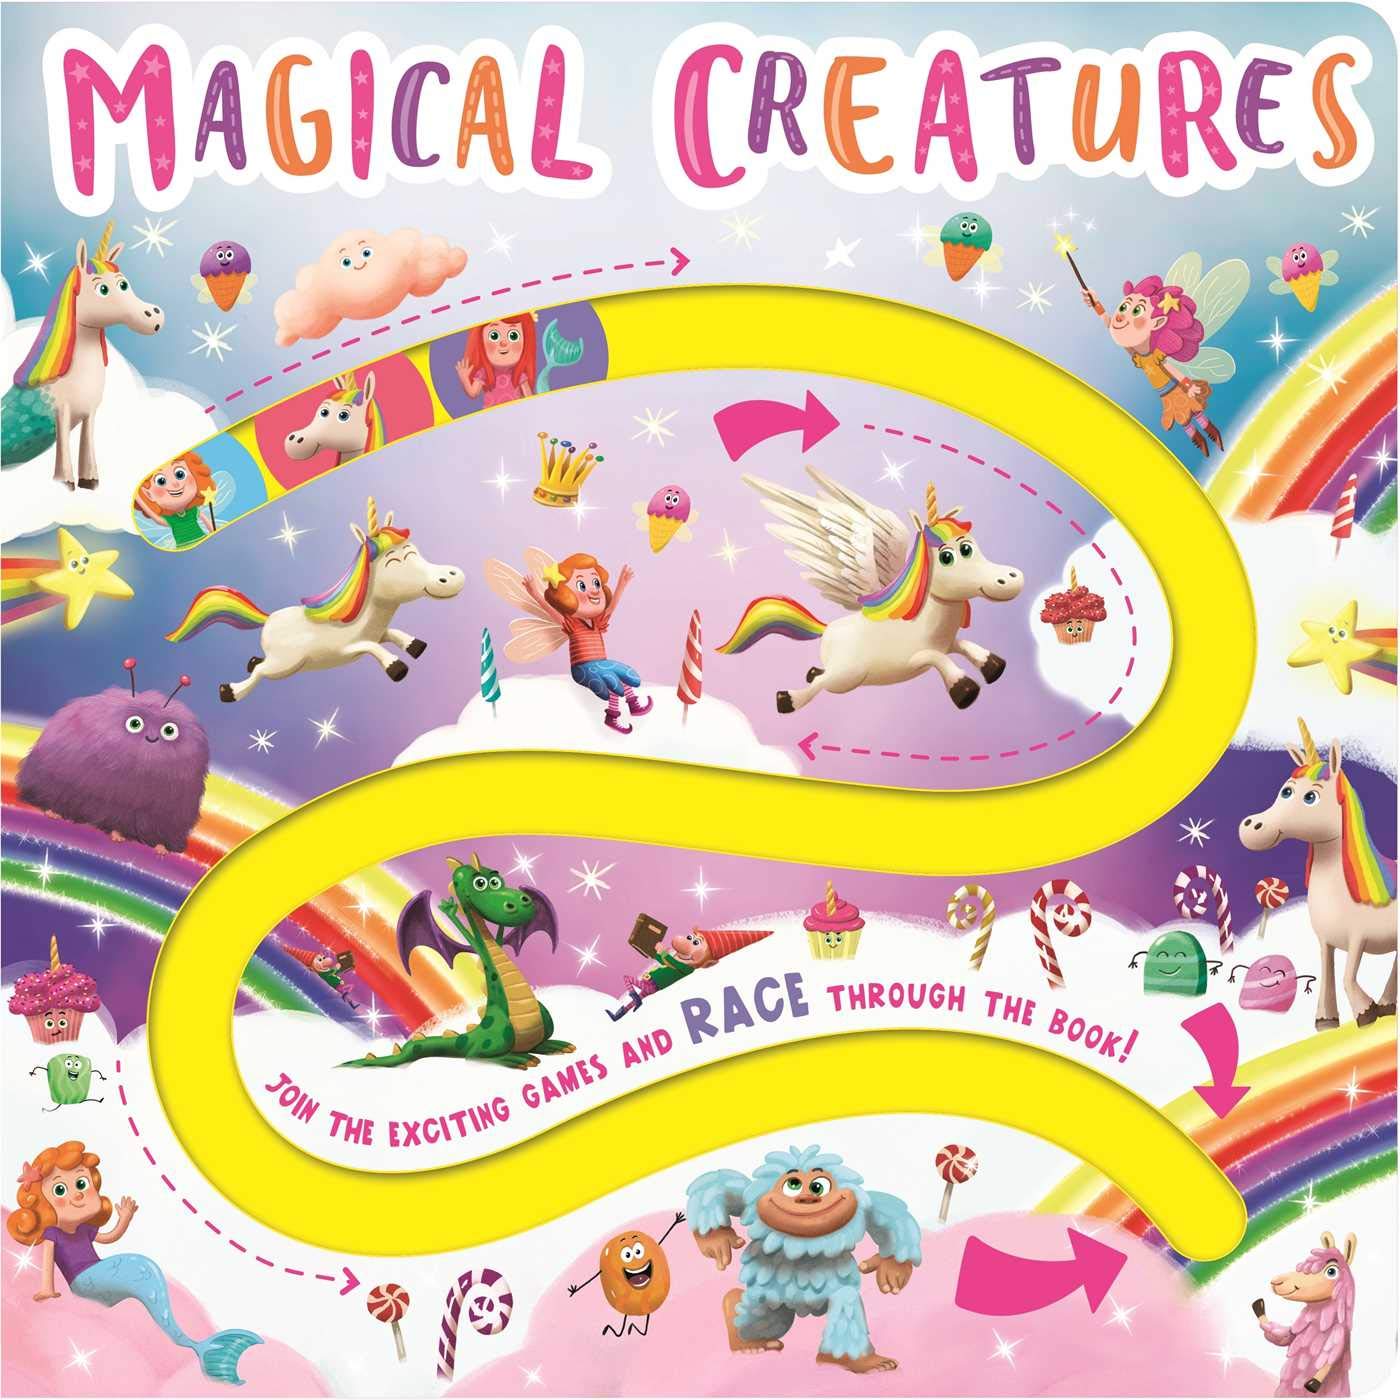 Magical Creatures Maze Board: Maze Book for Kids